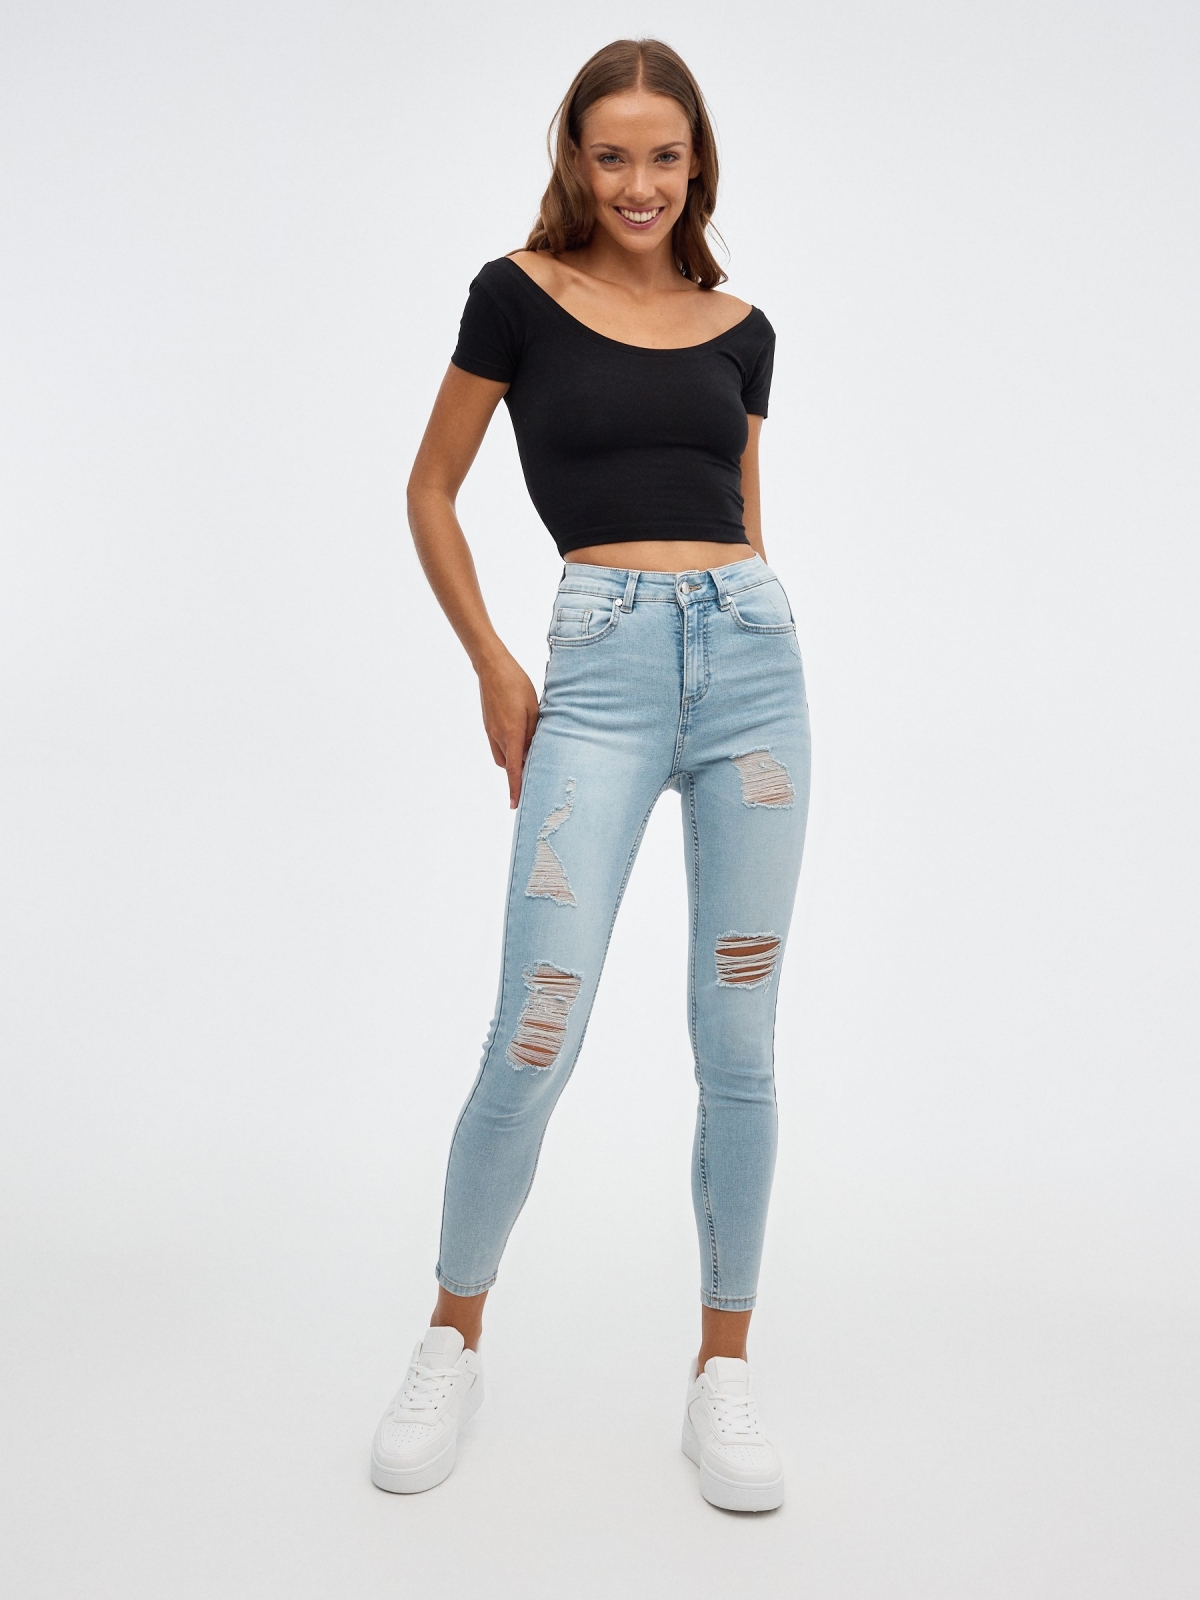 Pantalones jeans mujer: para cualquier ocasión - Renner